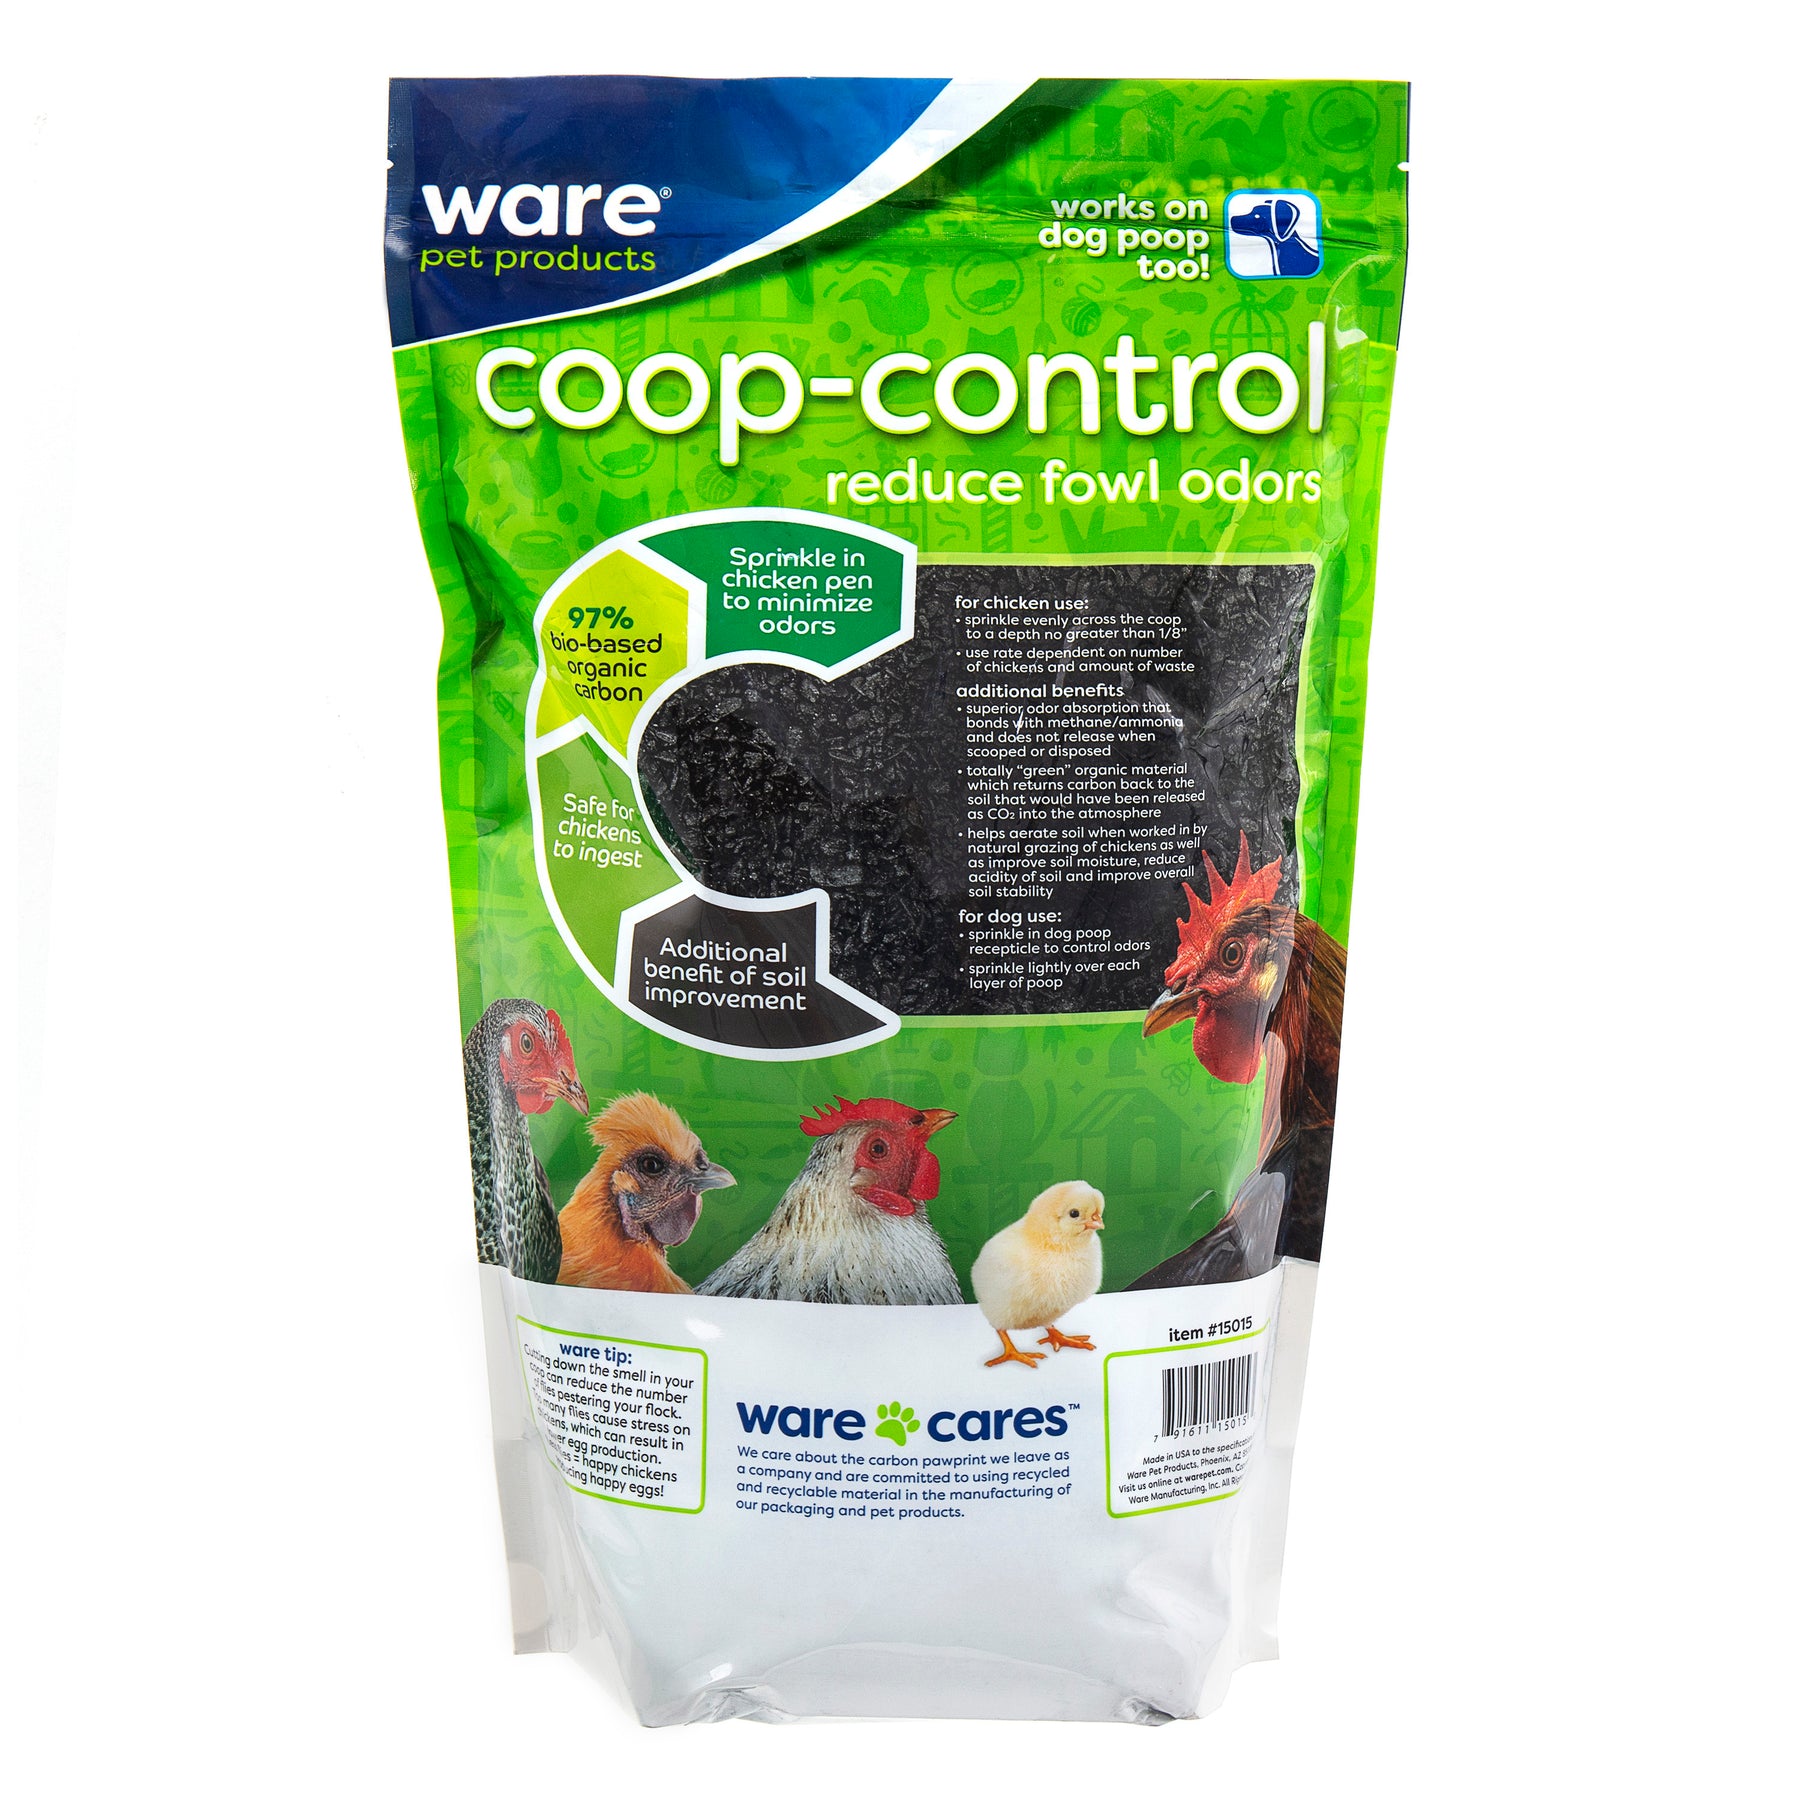 Coop-Control Reduce Fowl Odors